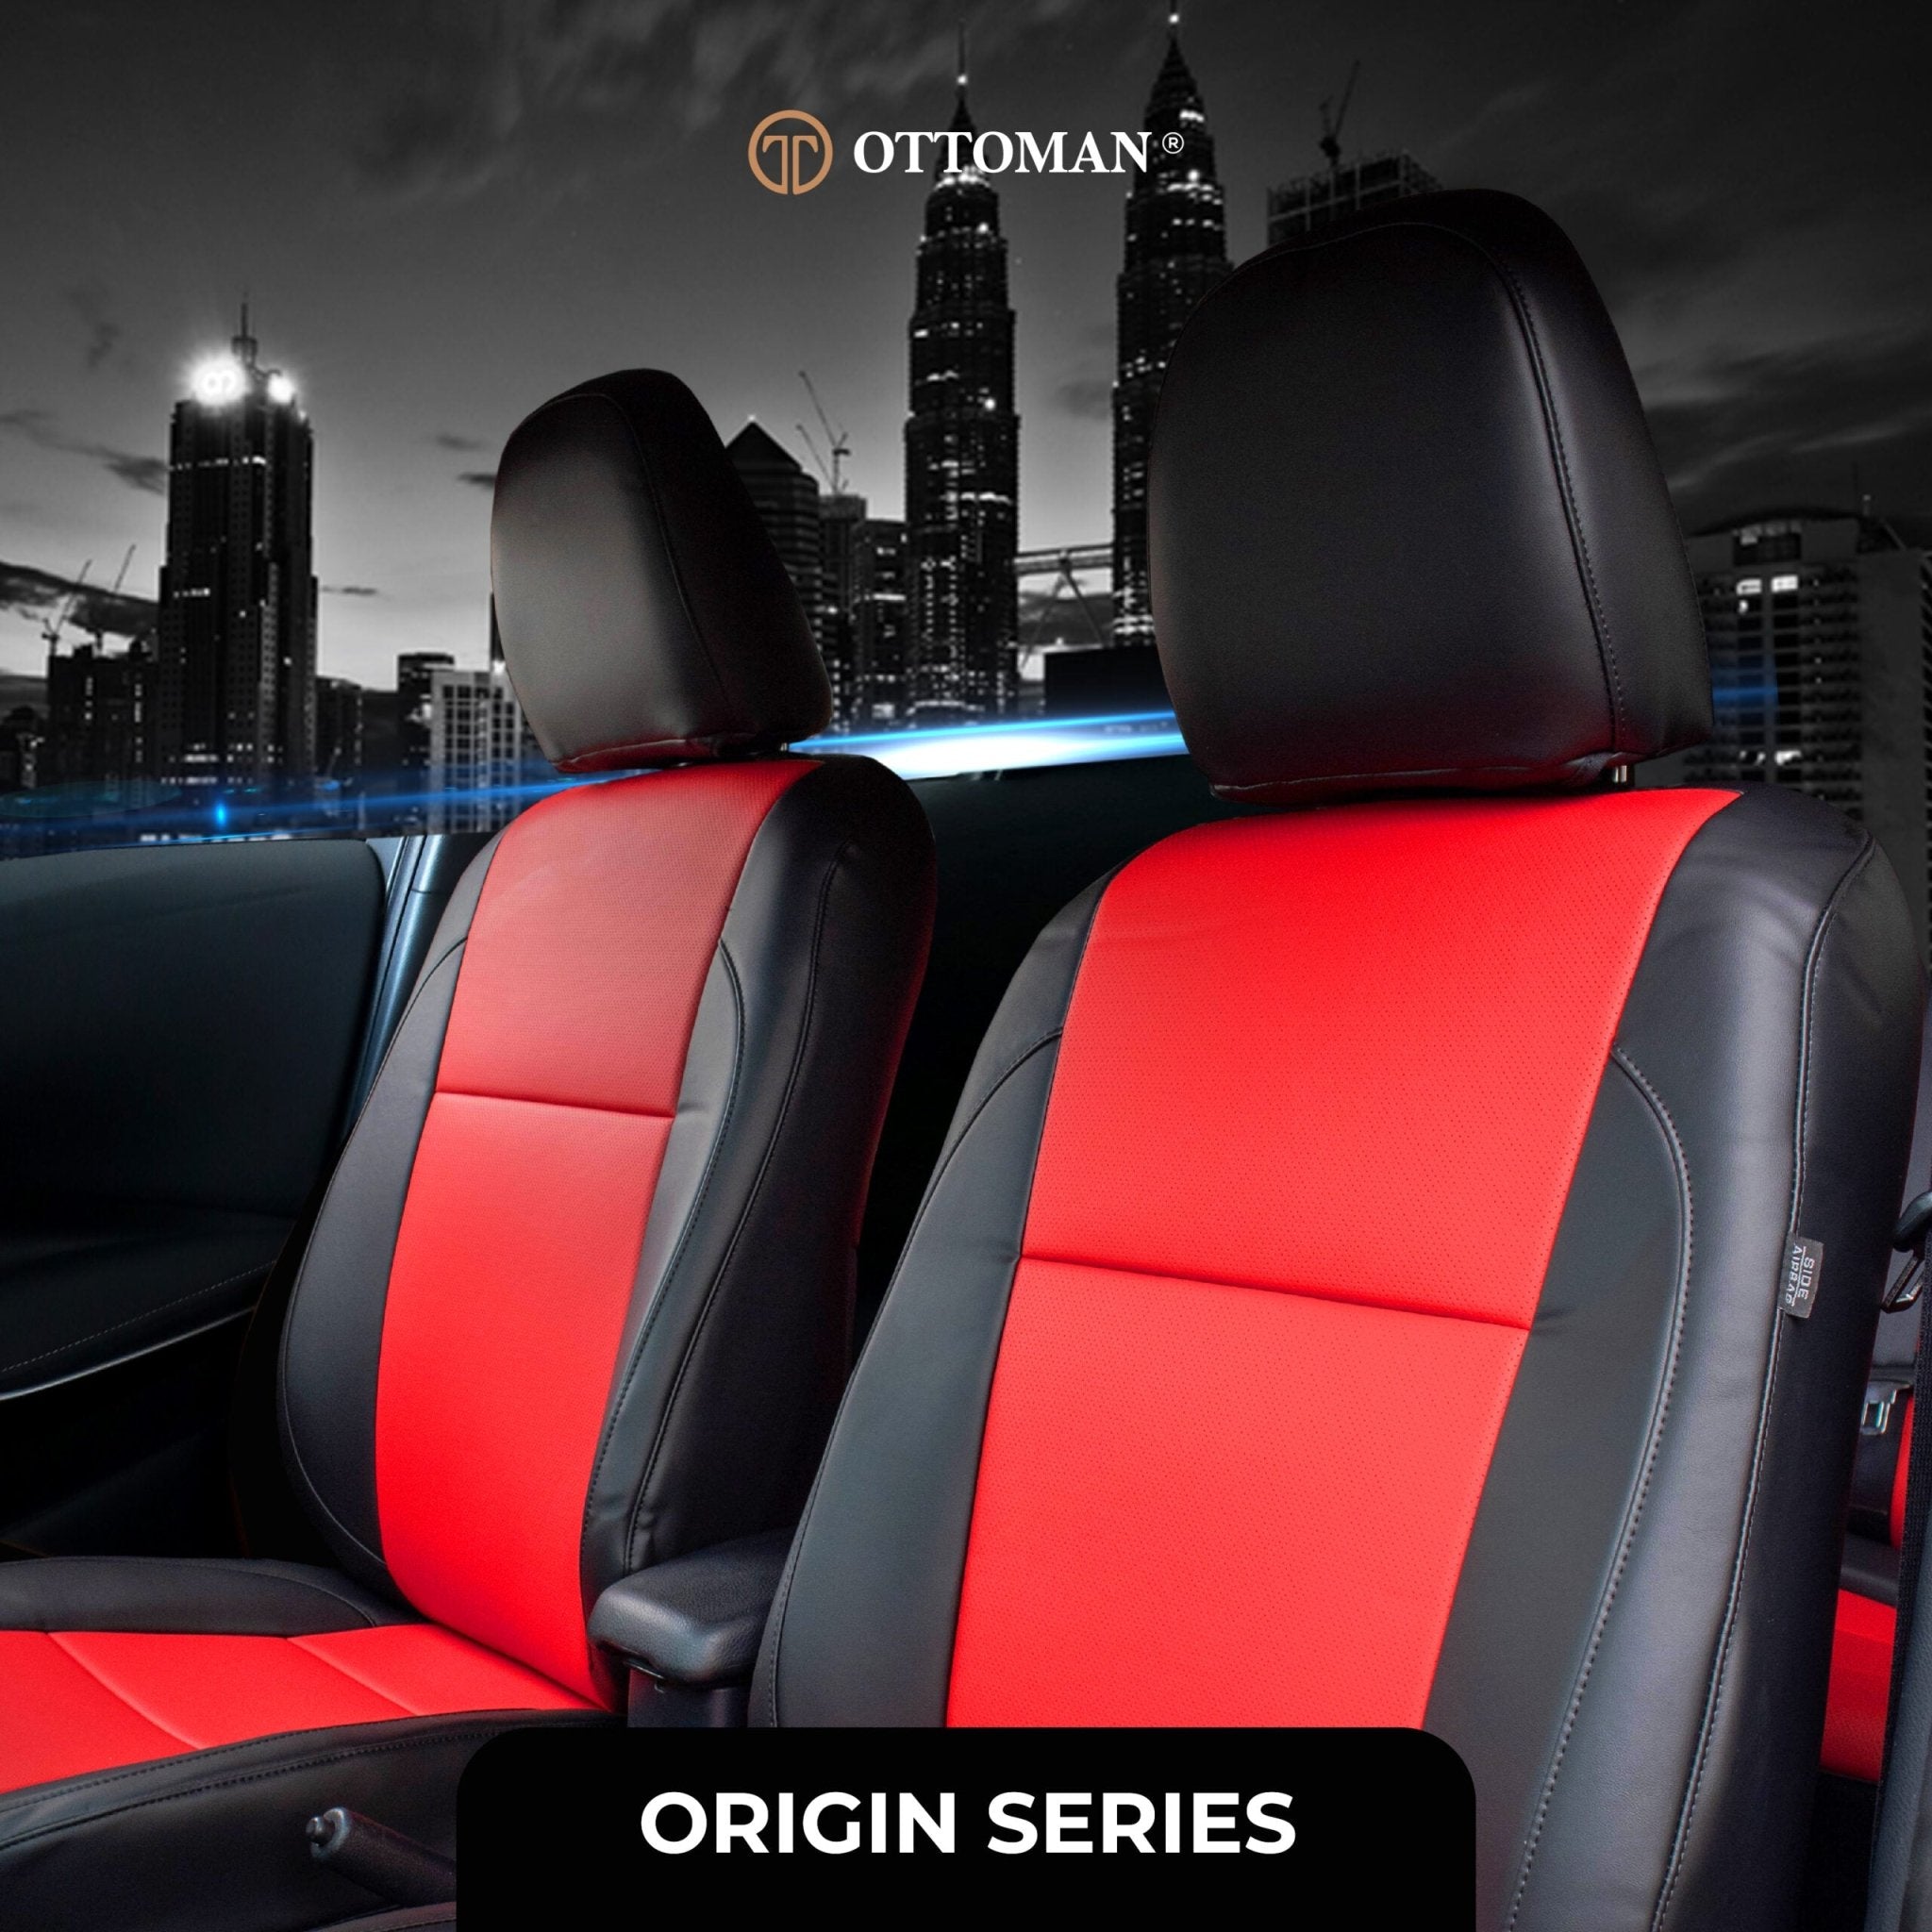 Peugeot 408 (2016-Present) Ottoman Seat Cover Seat Cover in Klang Selangor, Penang, Johor Bahru - Ottoman Car Mats